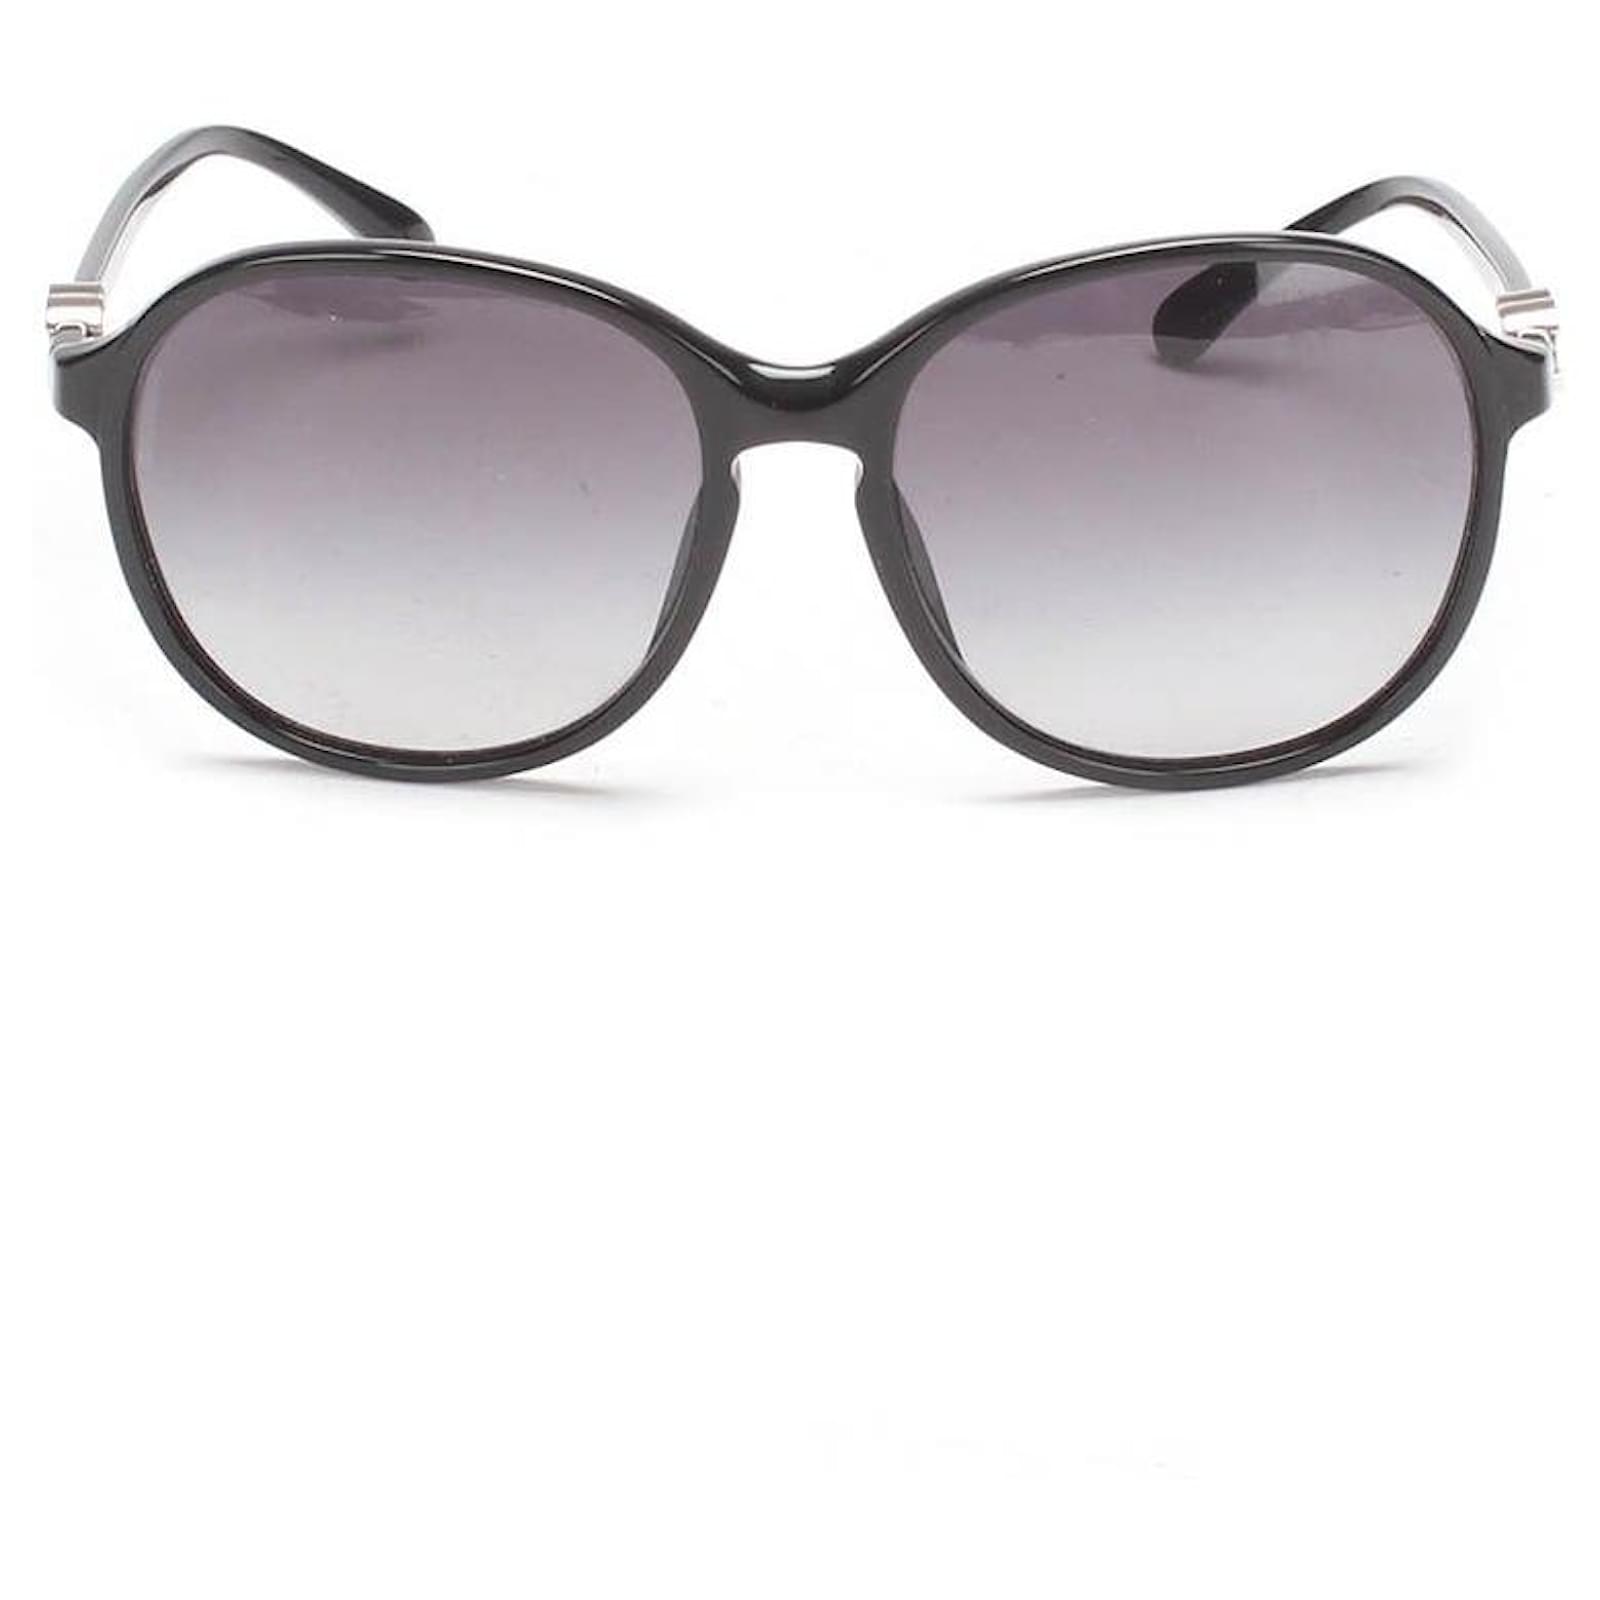 Square Rectangle Chanel Sunglasses  Vintage Channel Sunglasses  Fashion  Square  Aliexpress